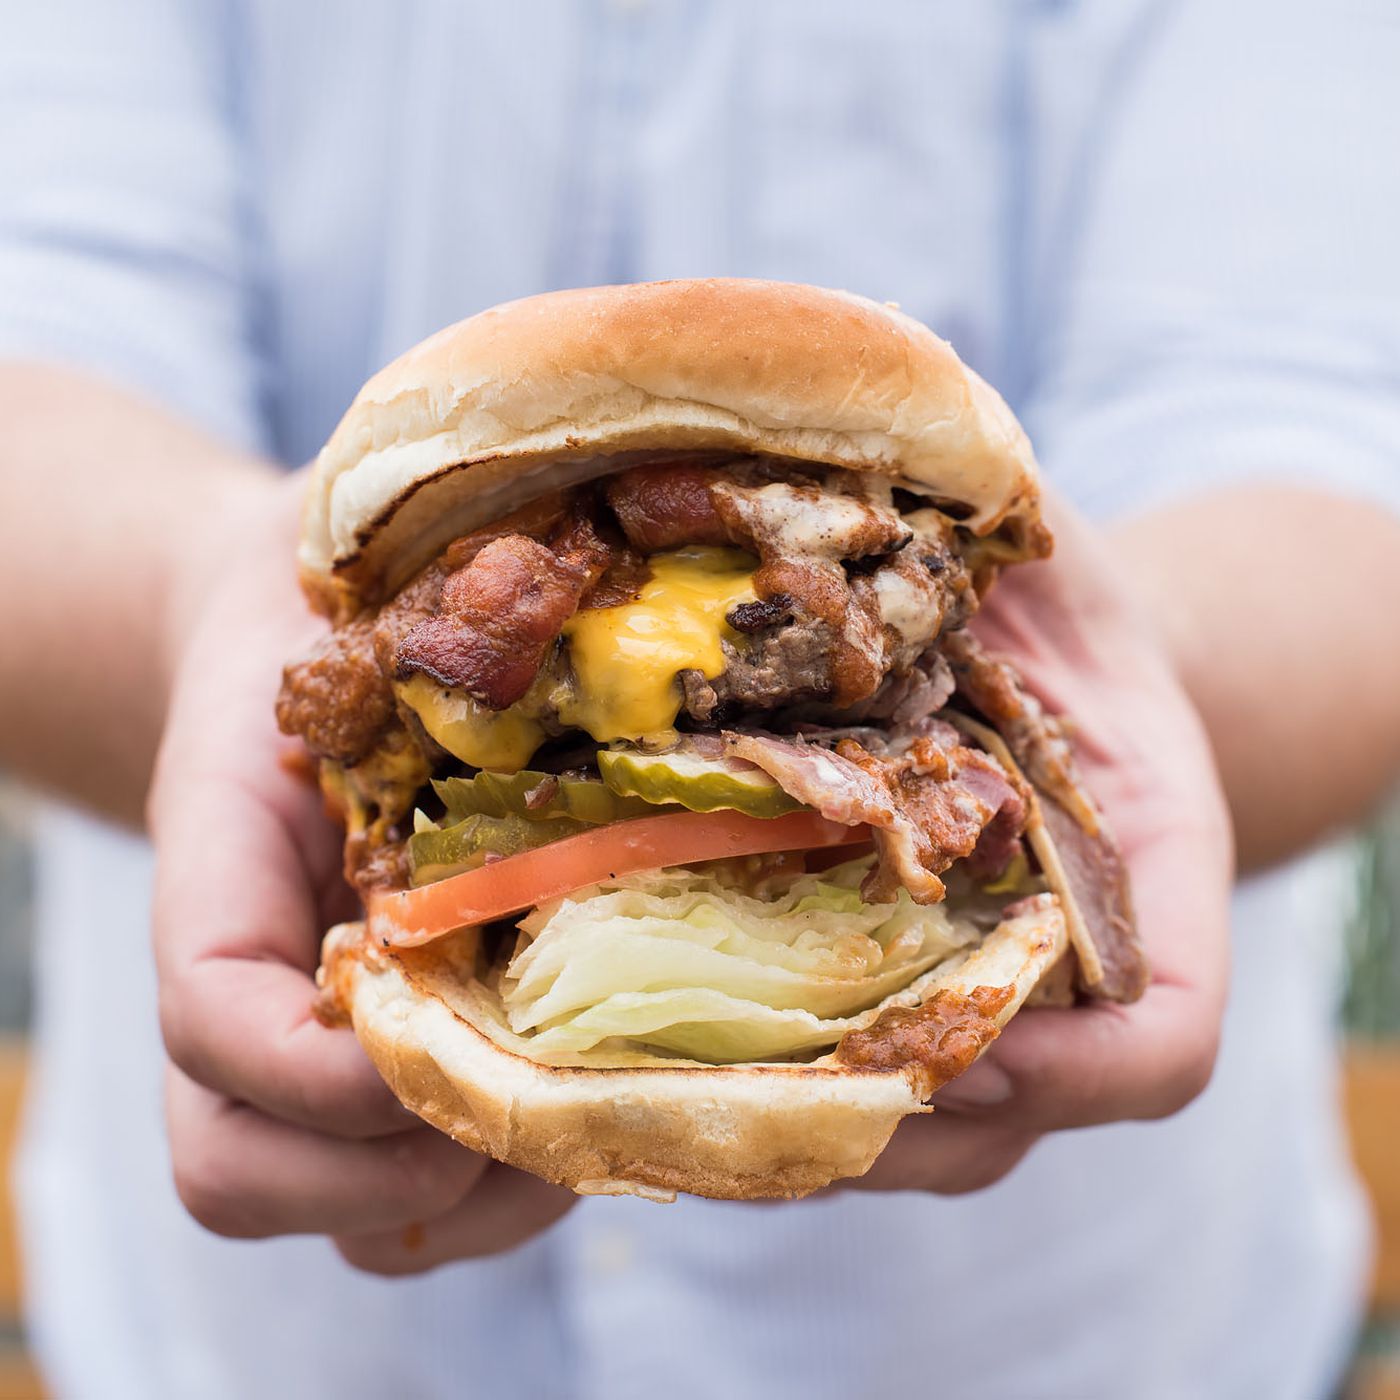 eater.com - Farley Elliott - Chinatown Burger Restaurant Brings Back the Beef After Finding Vegan Menu 'Unsustainable'